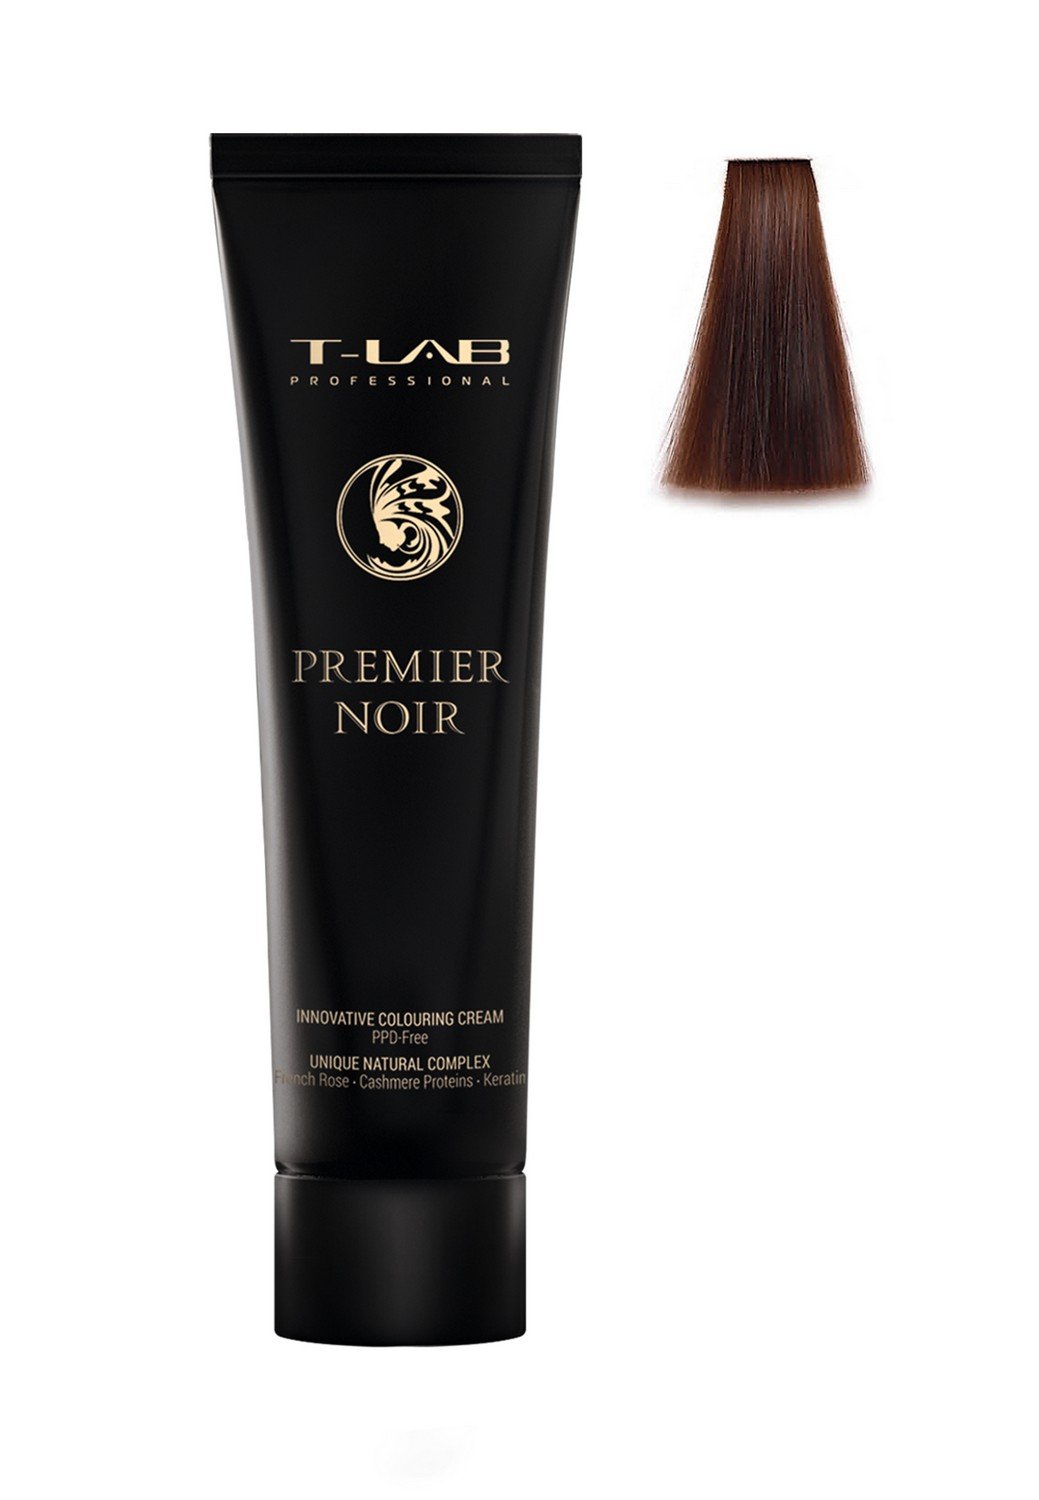 Крем-фарба T-LAB Professional Premier Noir colouring cream, відтінок 6.42 (dark copper iridescent blonde) - фото 2